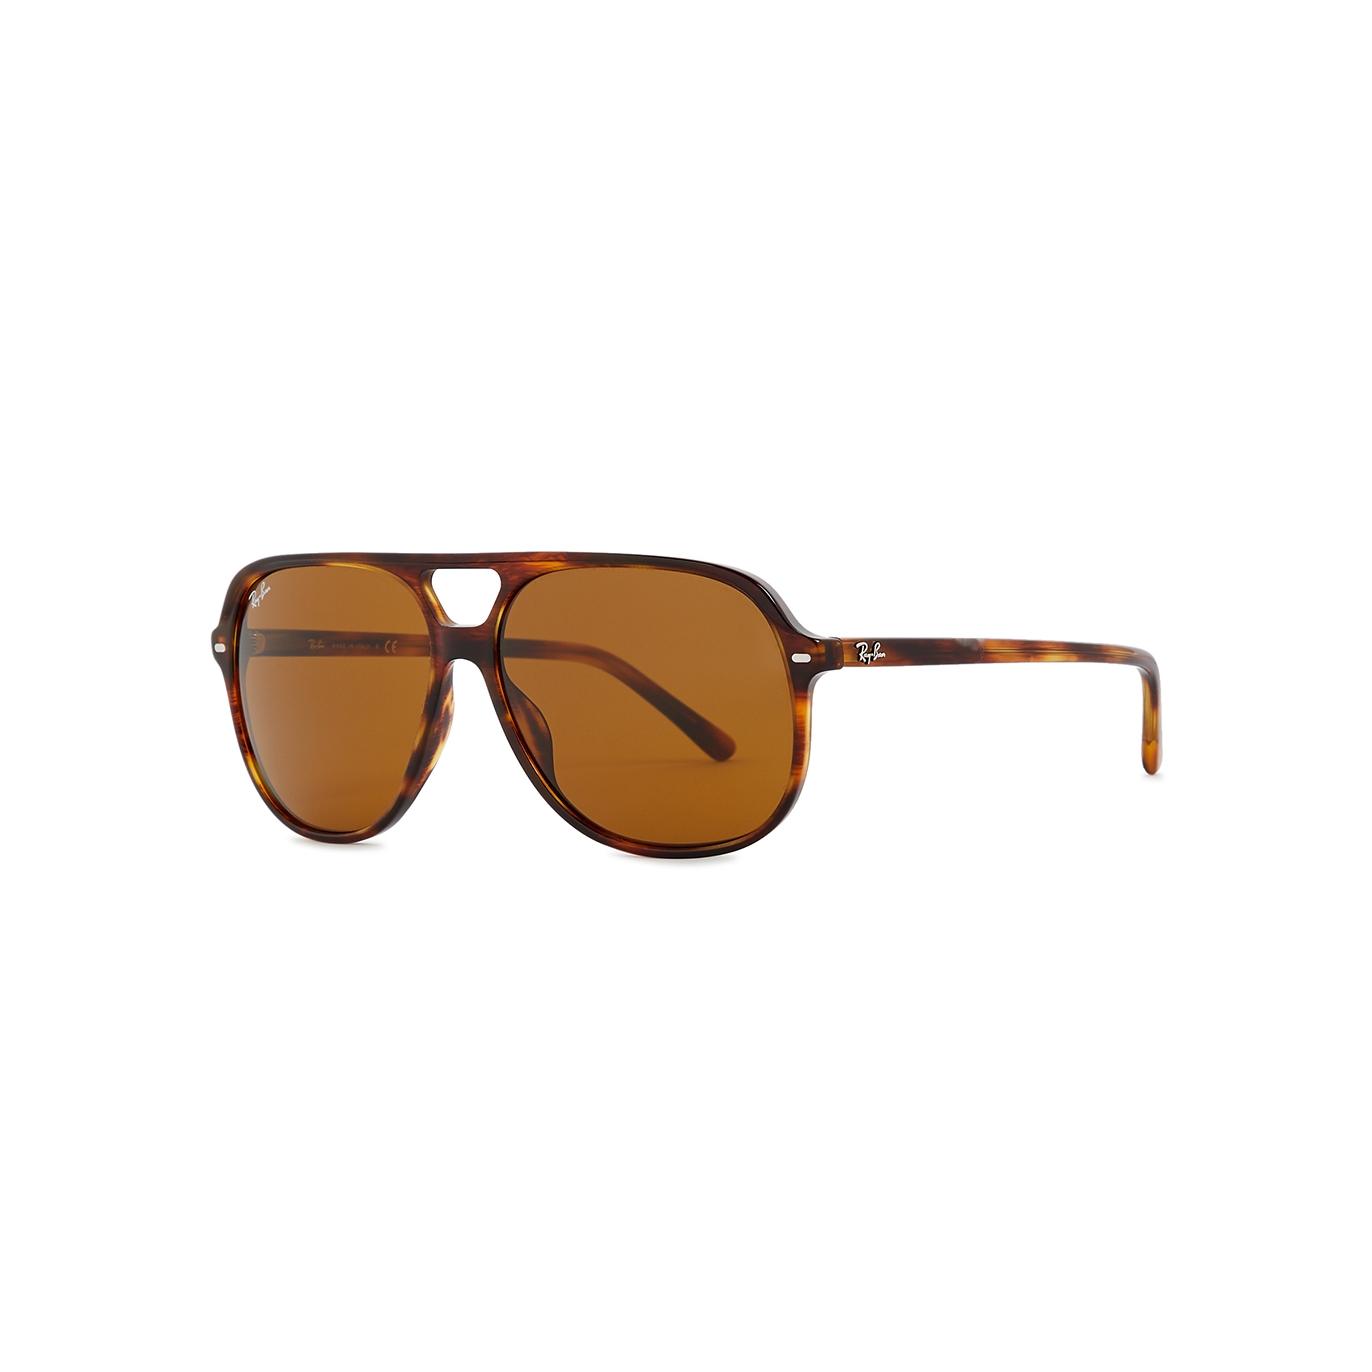 Ray-ban Bill 56 Aviator-style Sunglasses - Brown